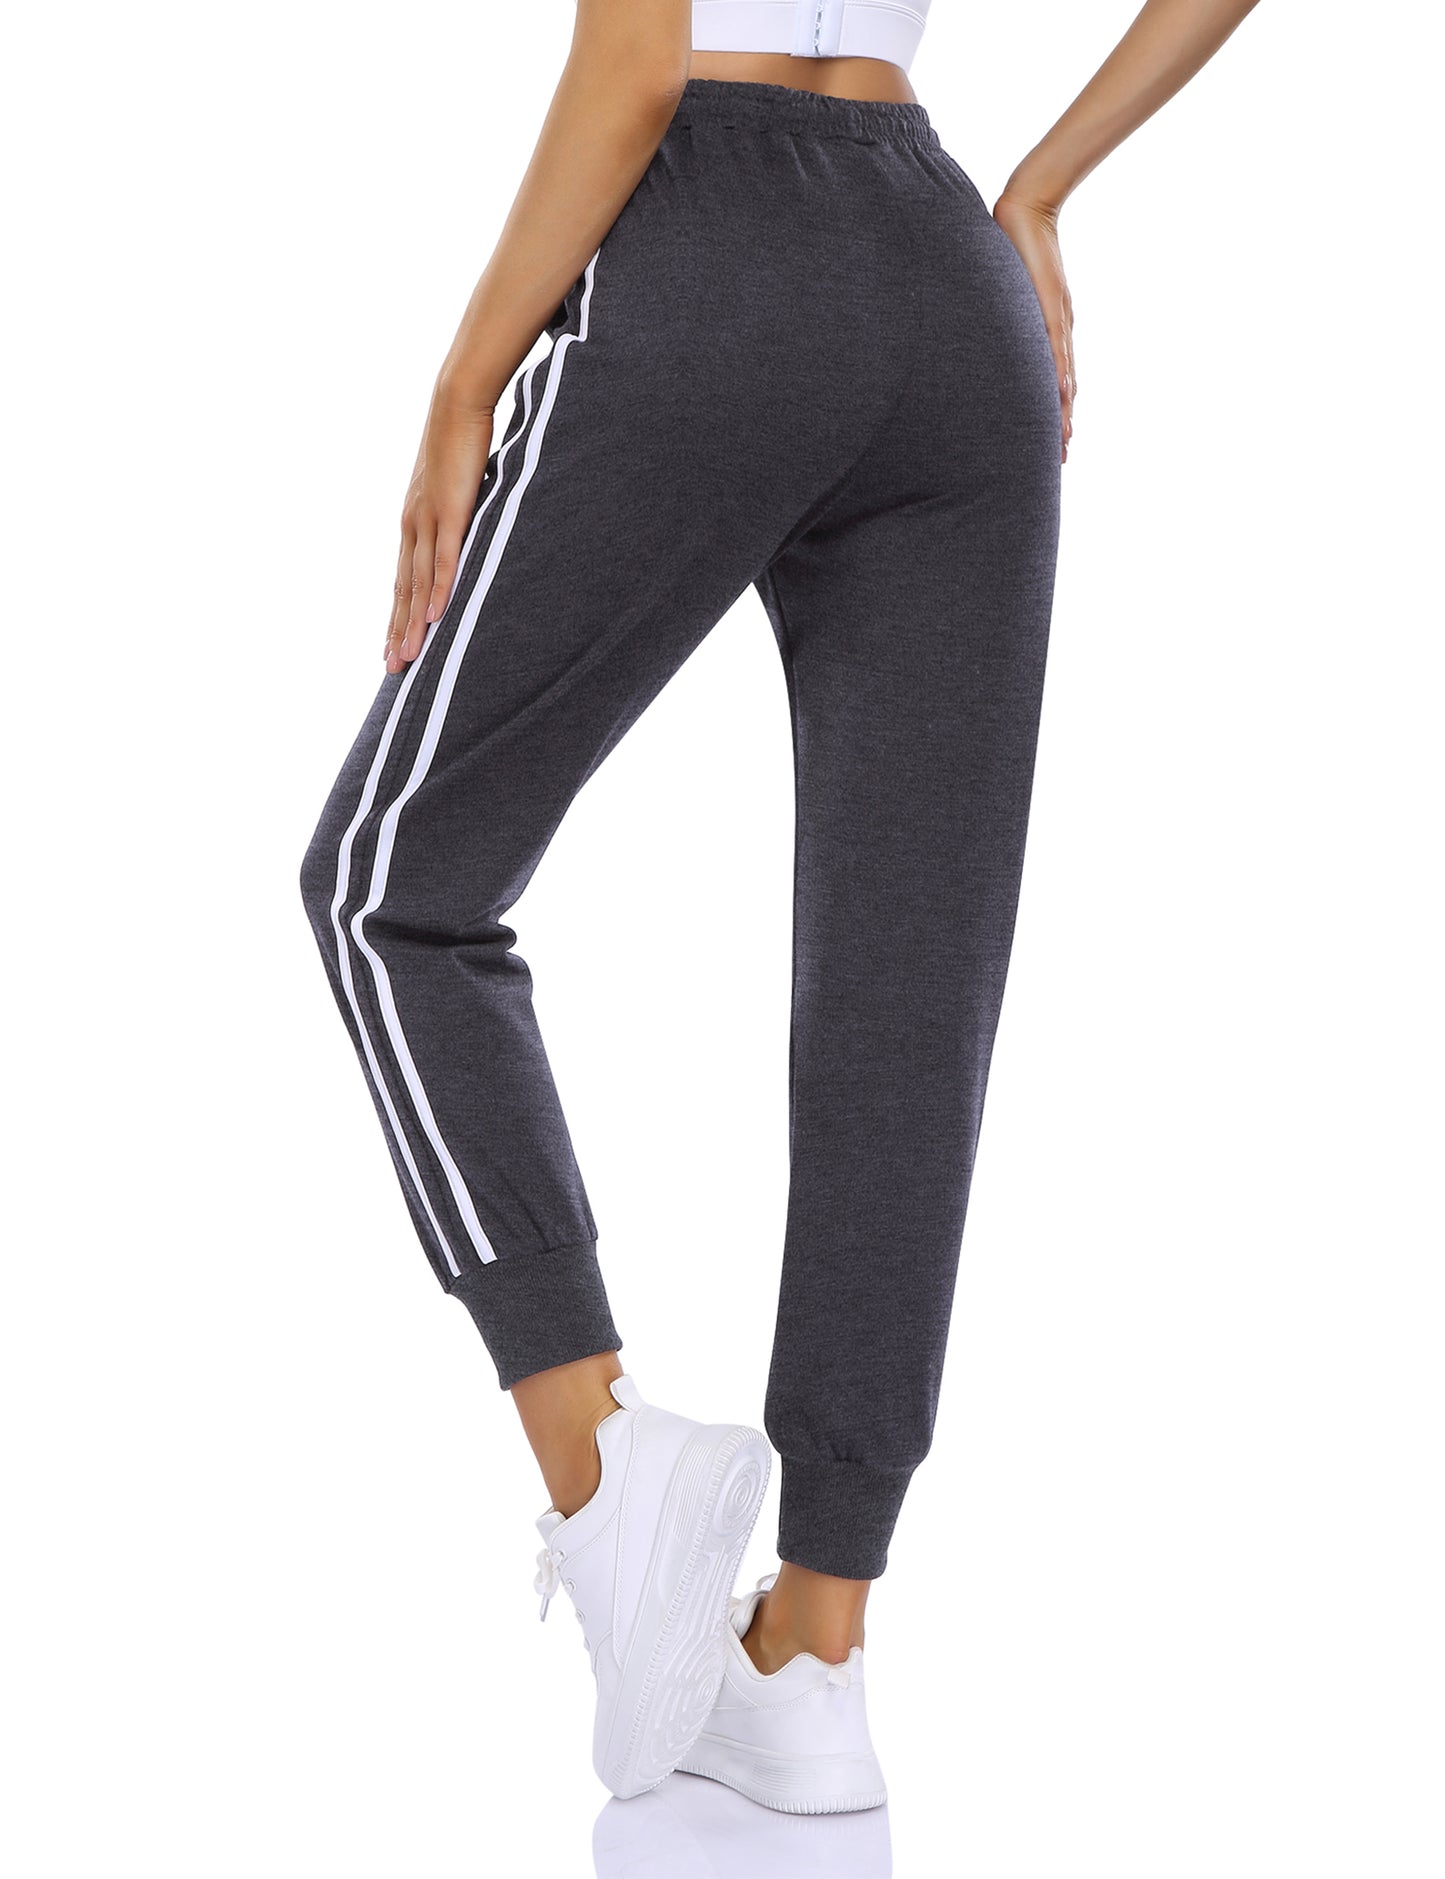 YESFASHION Women's Drawstring Exercise Pants Dark Grey